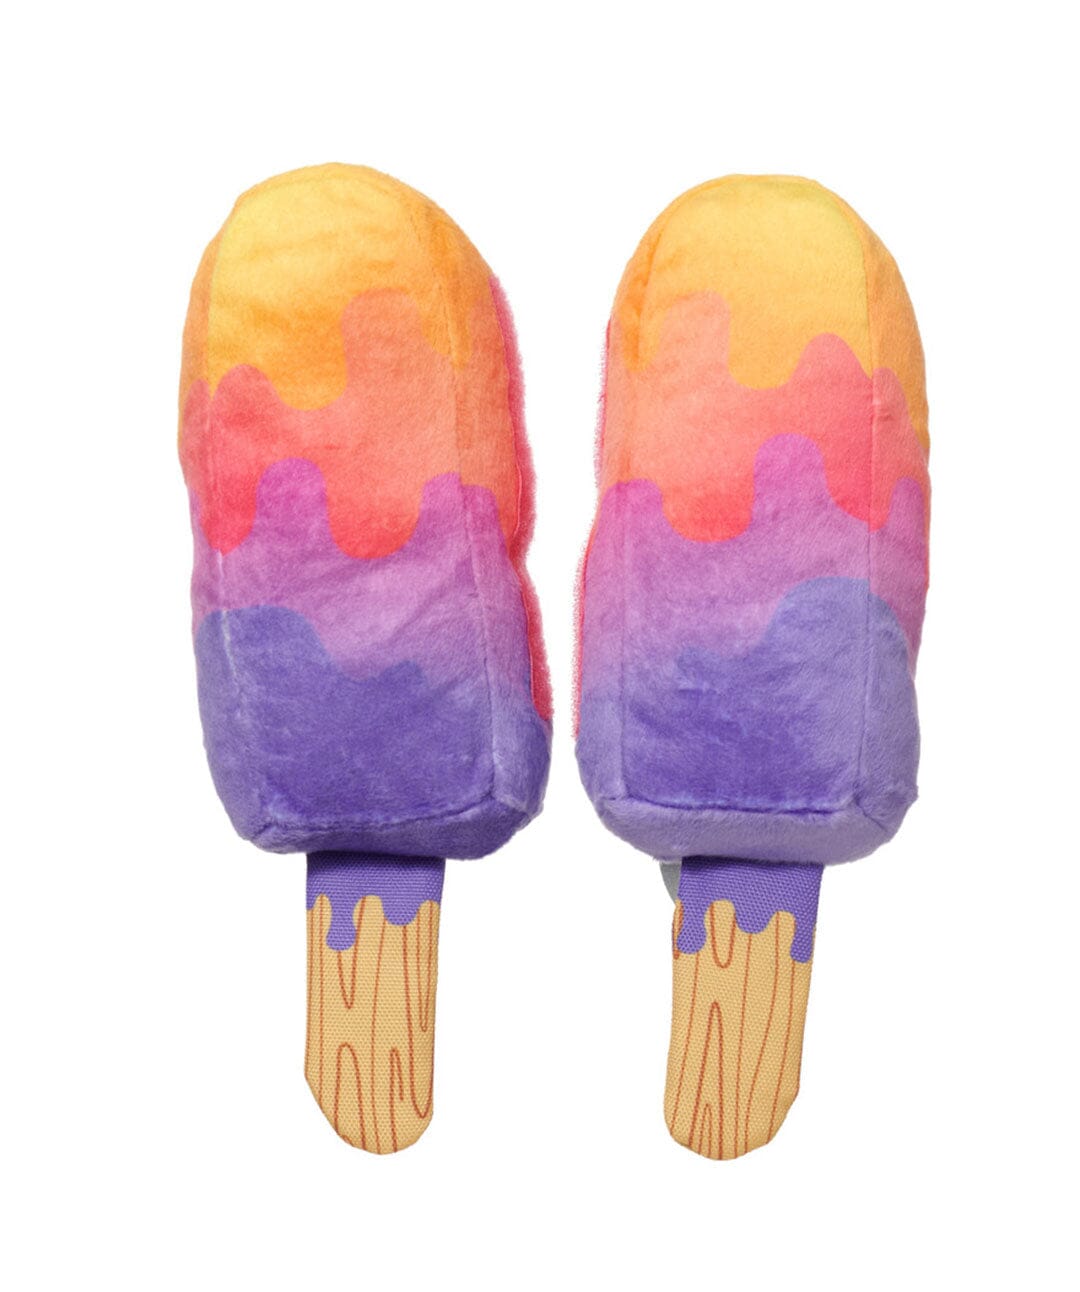 Rainbow Popsicle Plush Squeaker Toy